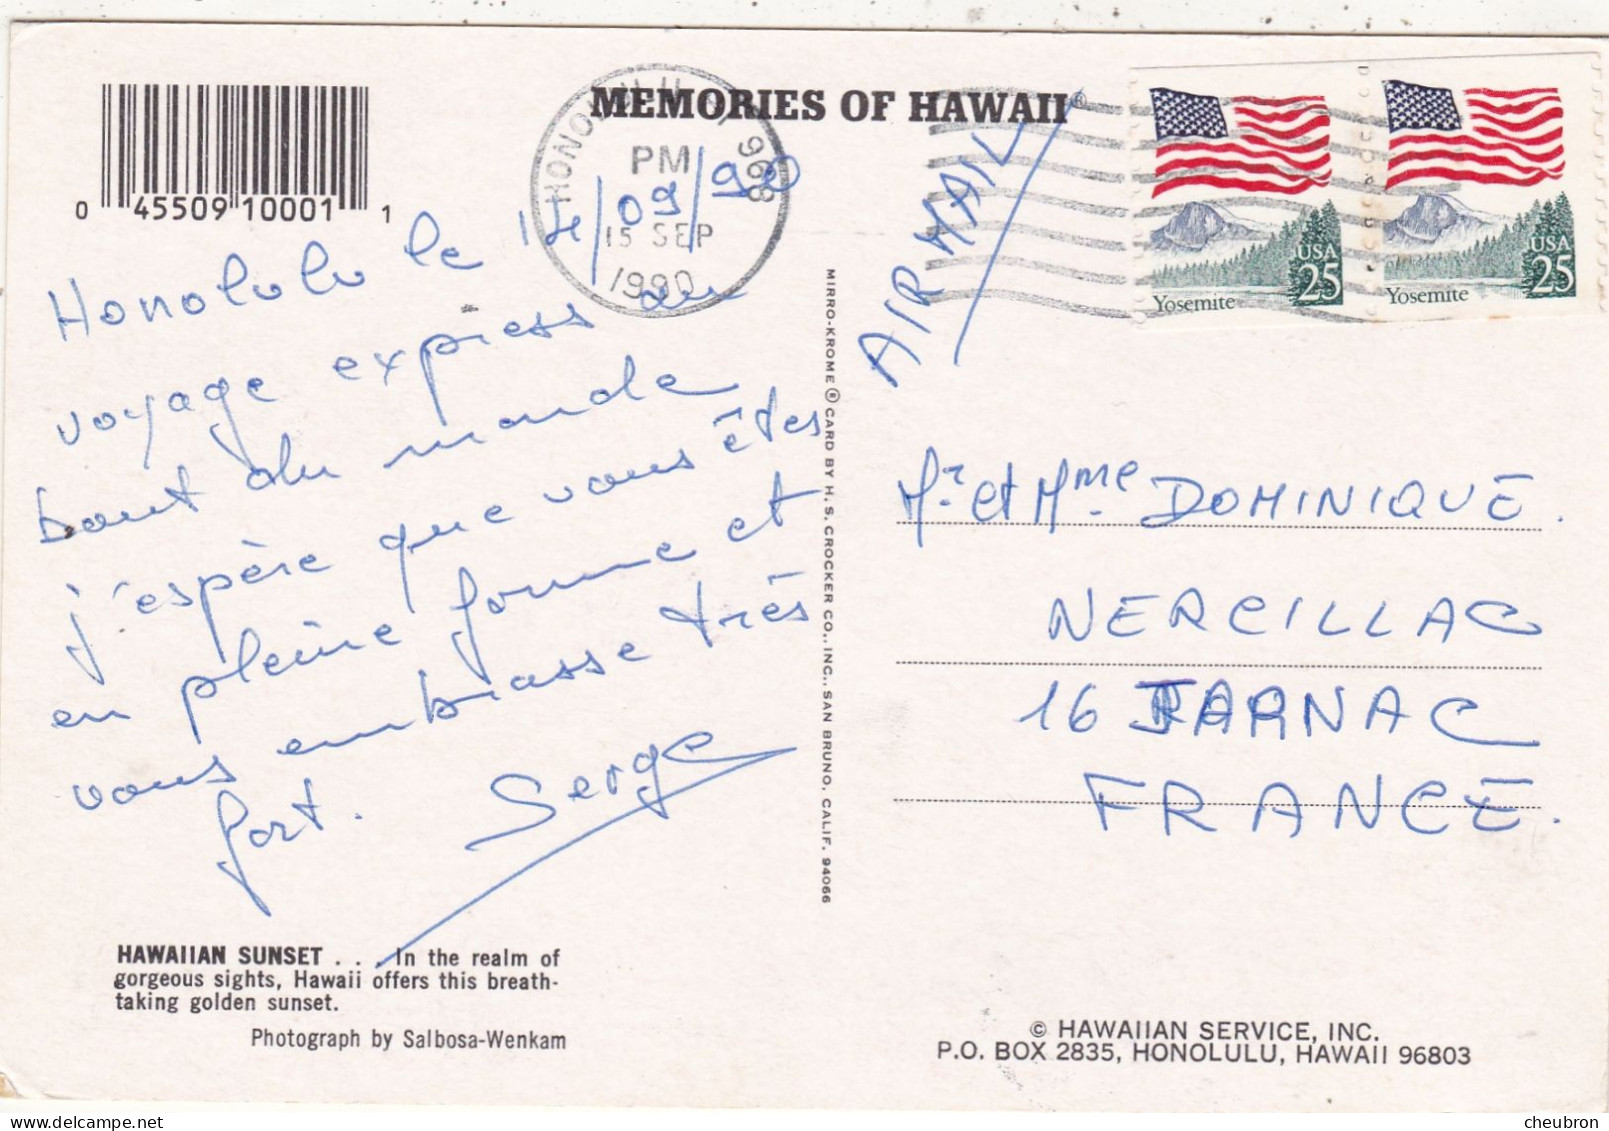 ETATS UNIS. HI. HONOLULU (ENVOYE DE). " SUNSET IN HAWAII". ANNEE 1990 + TEXTE + TIMBRES - Honolulu